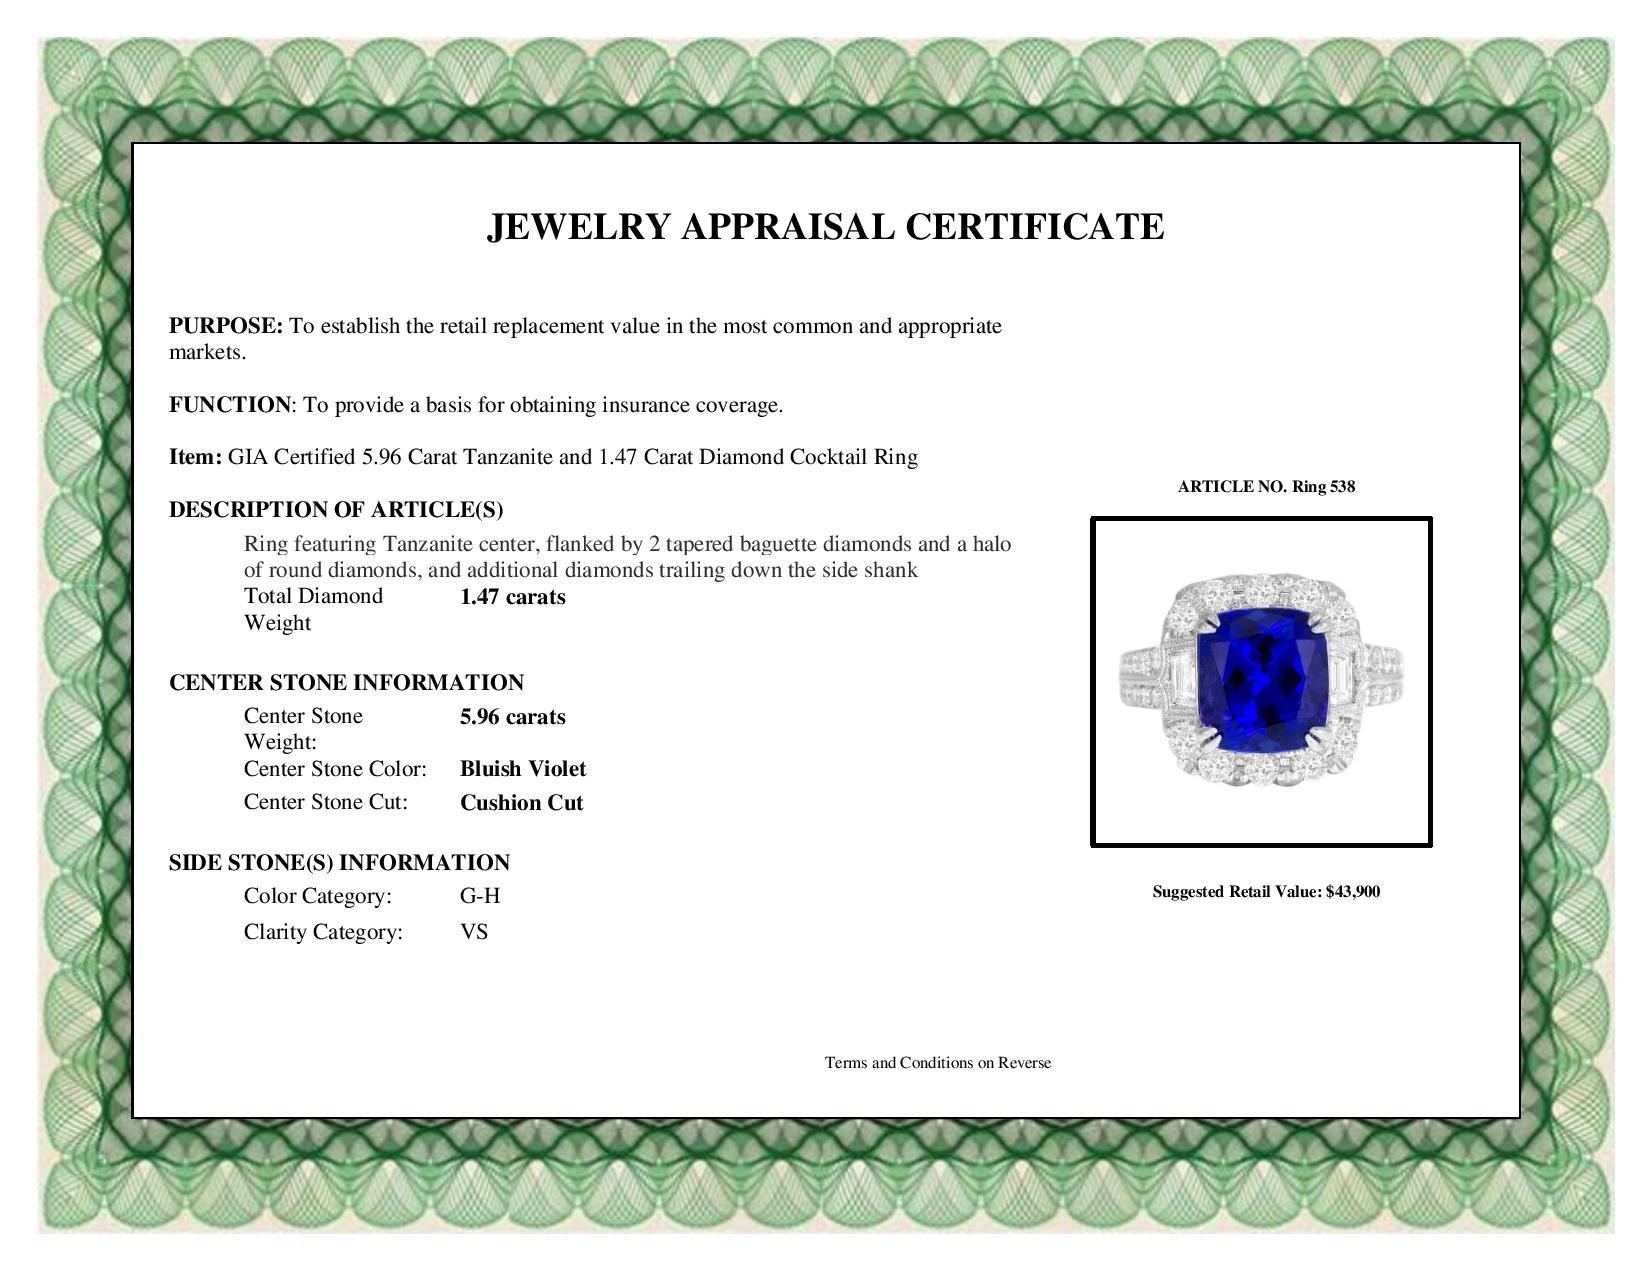 DiamondTown GIA Certified 5.96 Carat Tanzanite and 1.47 Carat Diamond Ring 1